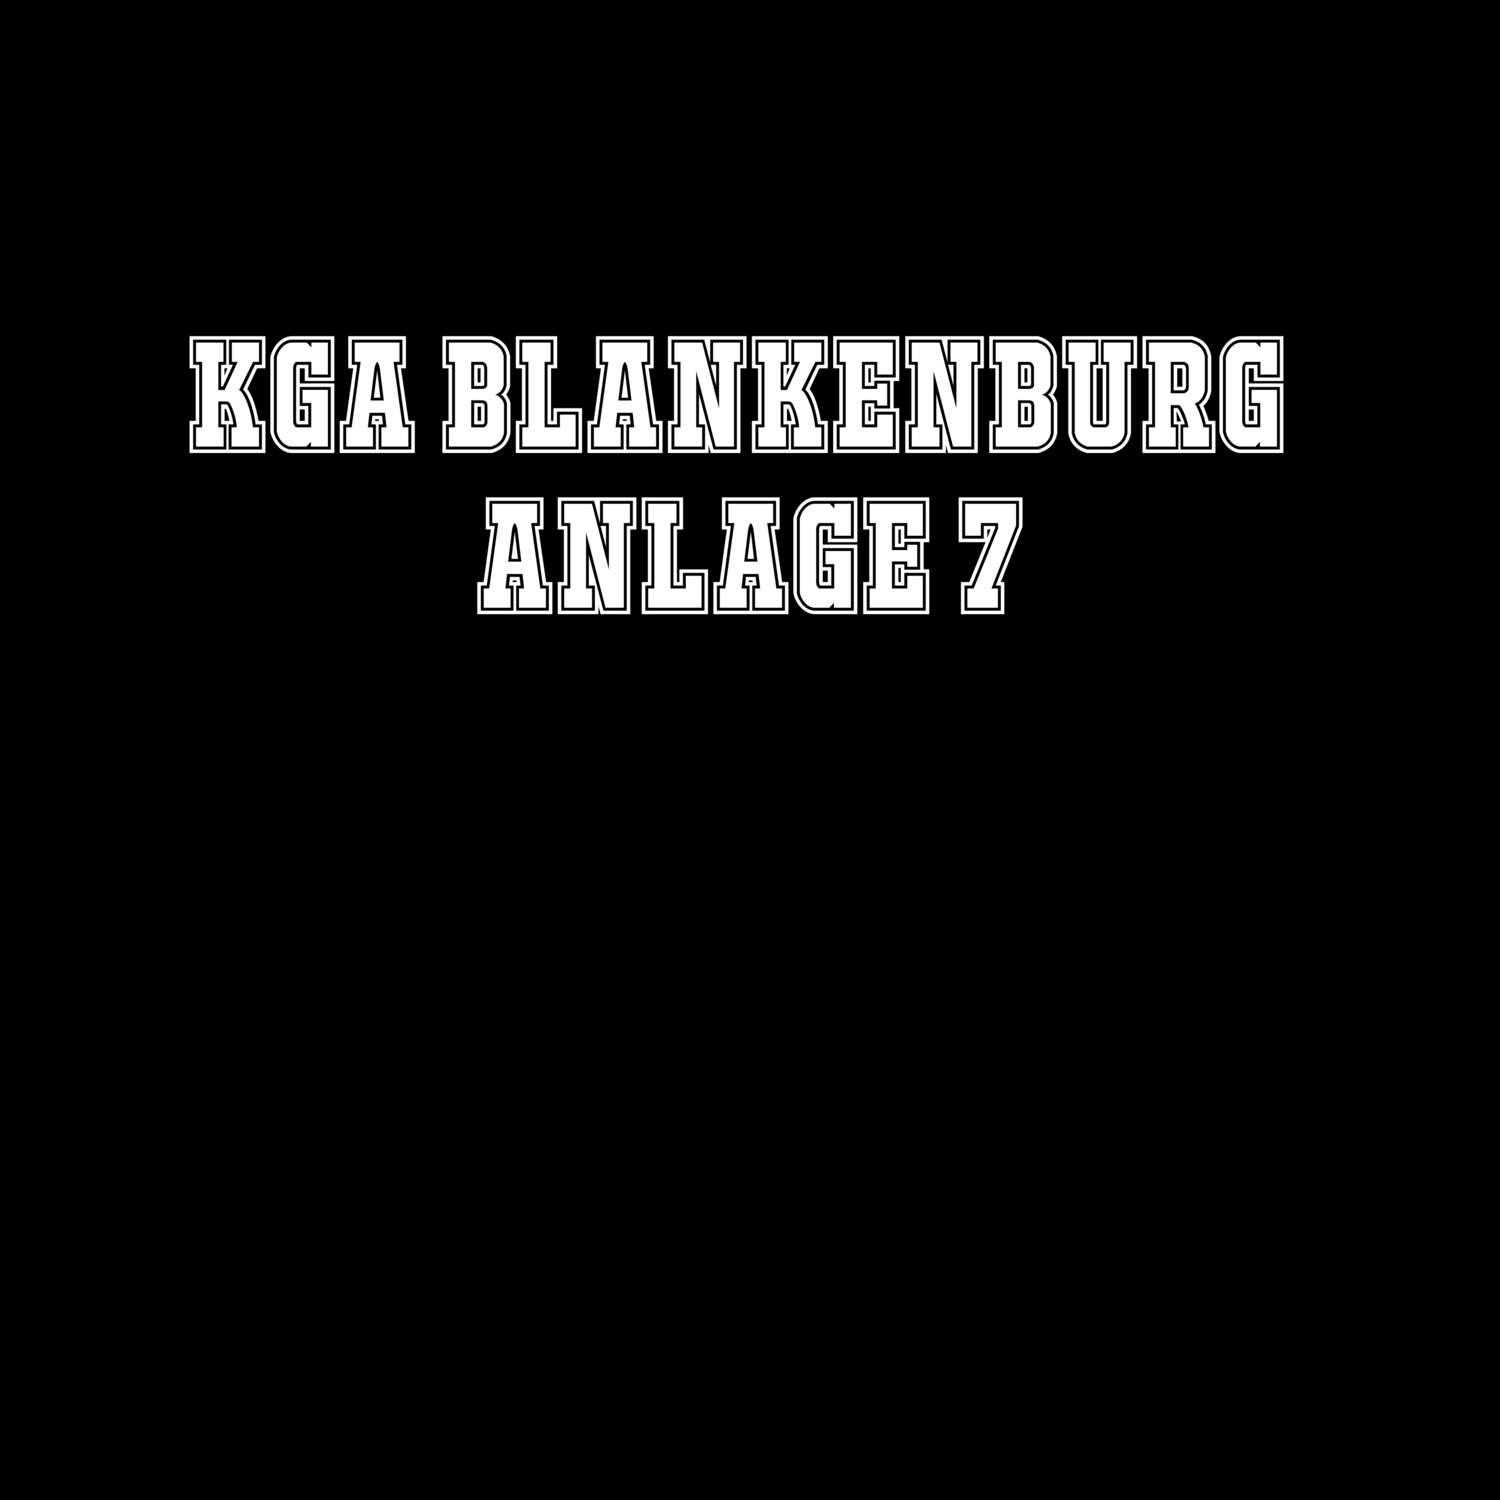 KGA Blankenburg Anlage 7 T-Shirt »Classic«